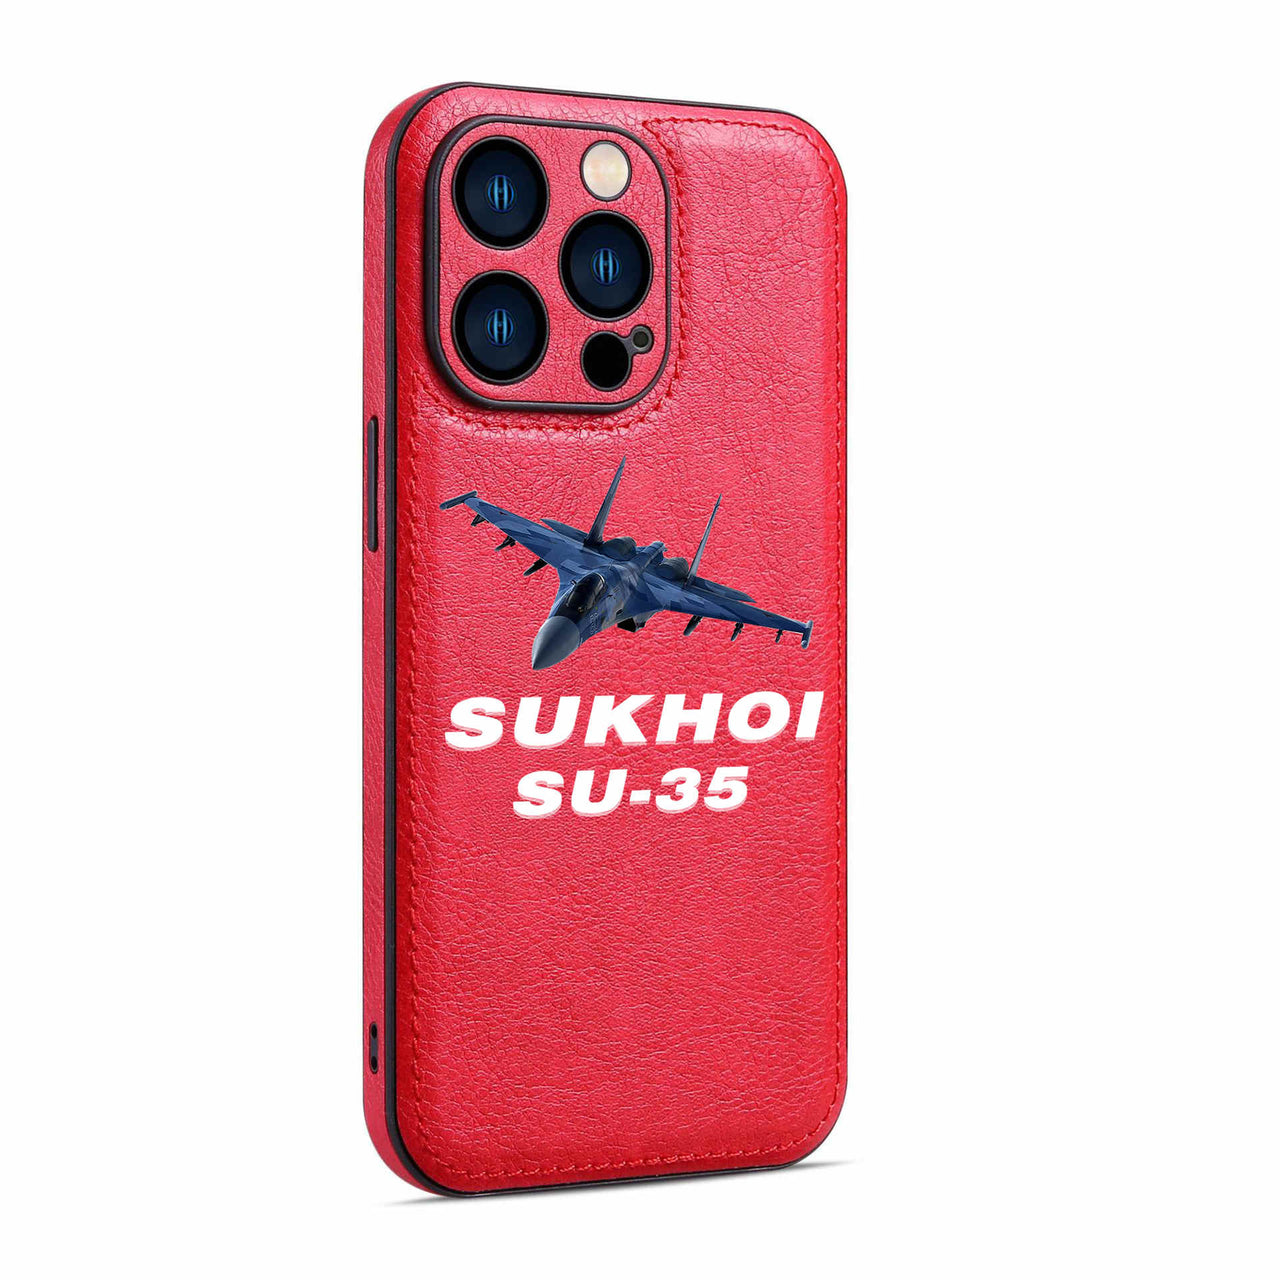 The Sukhoi SU-35 Designed Leather iPhone Cases